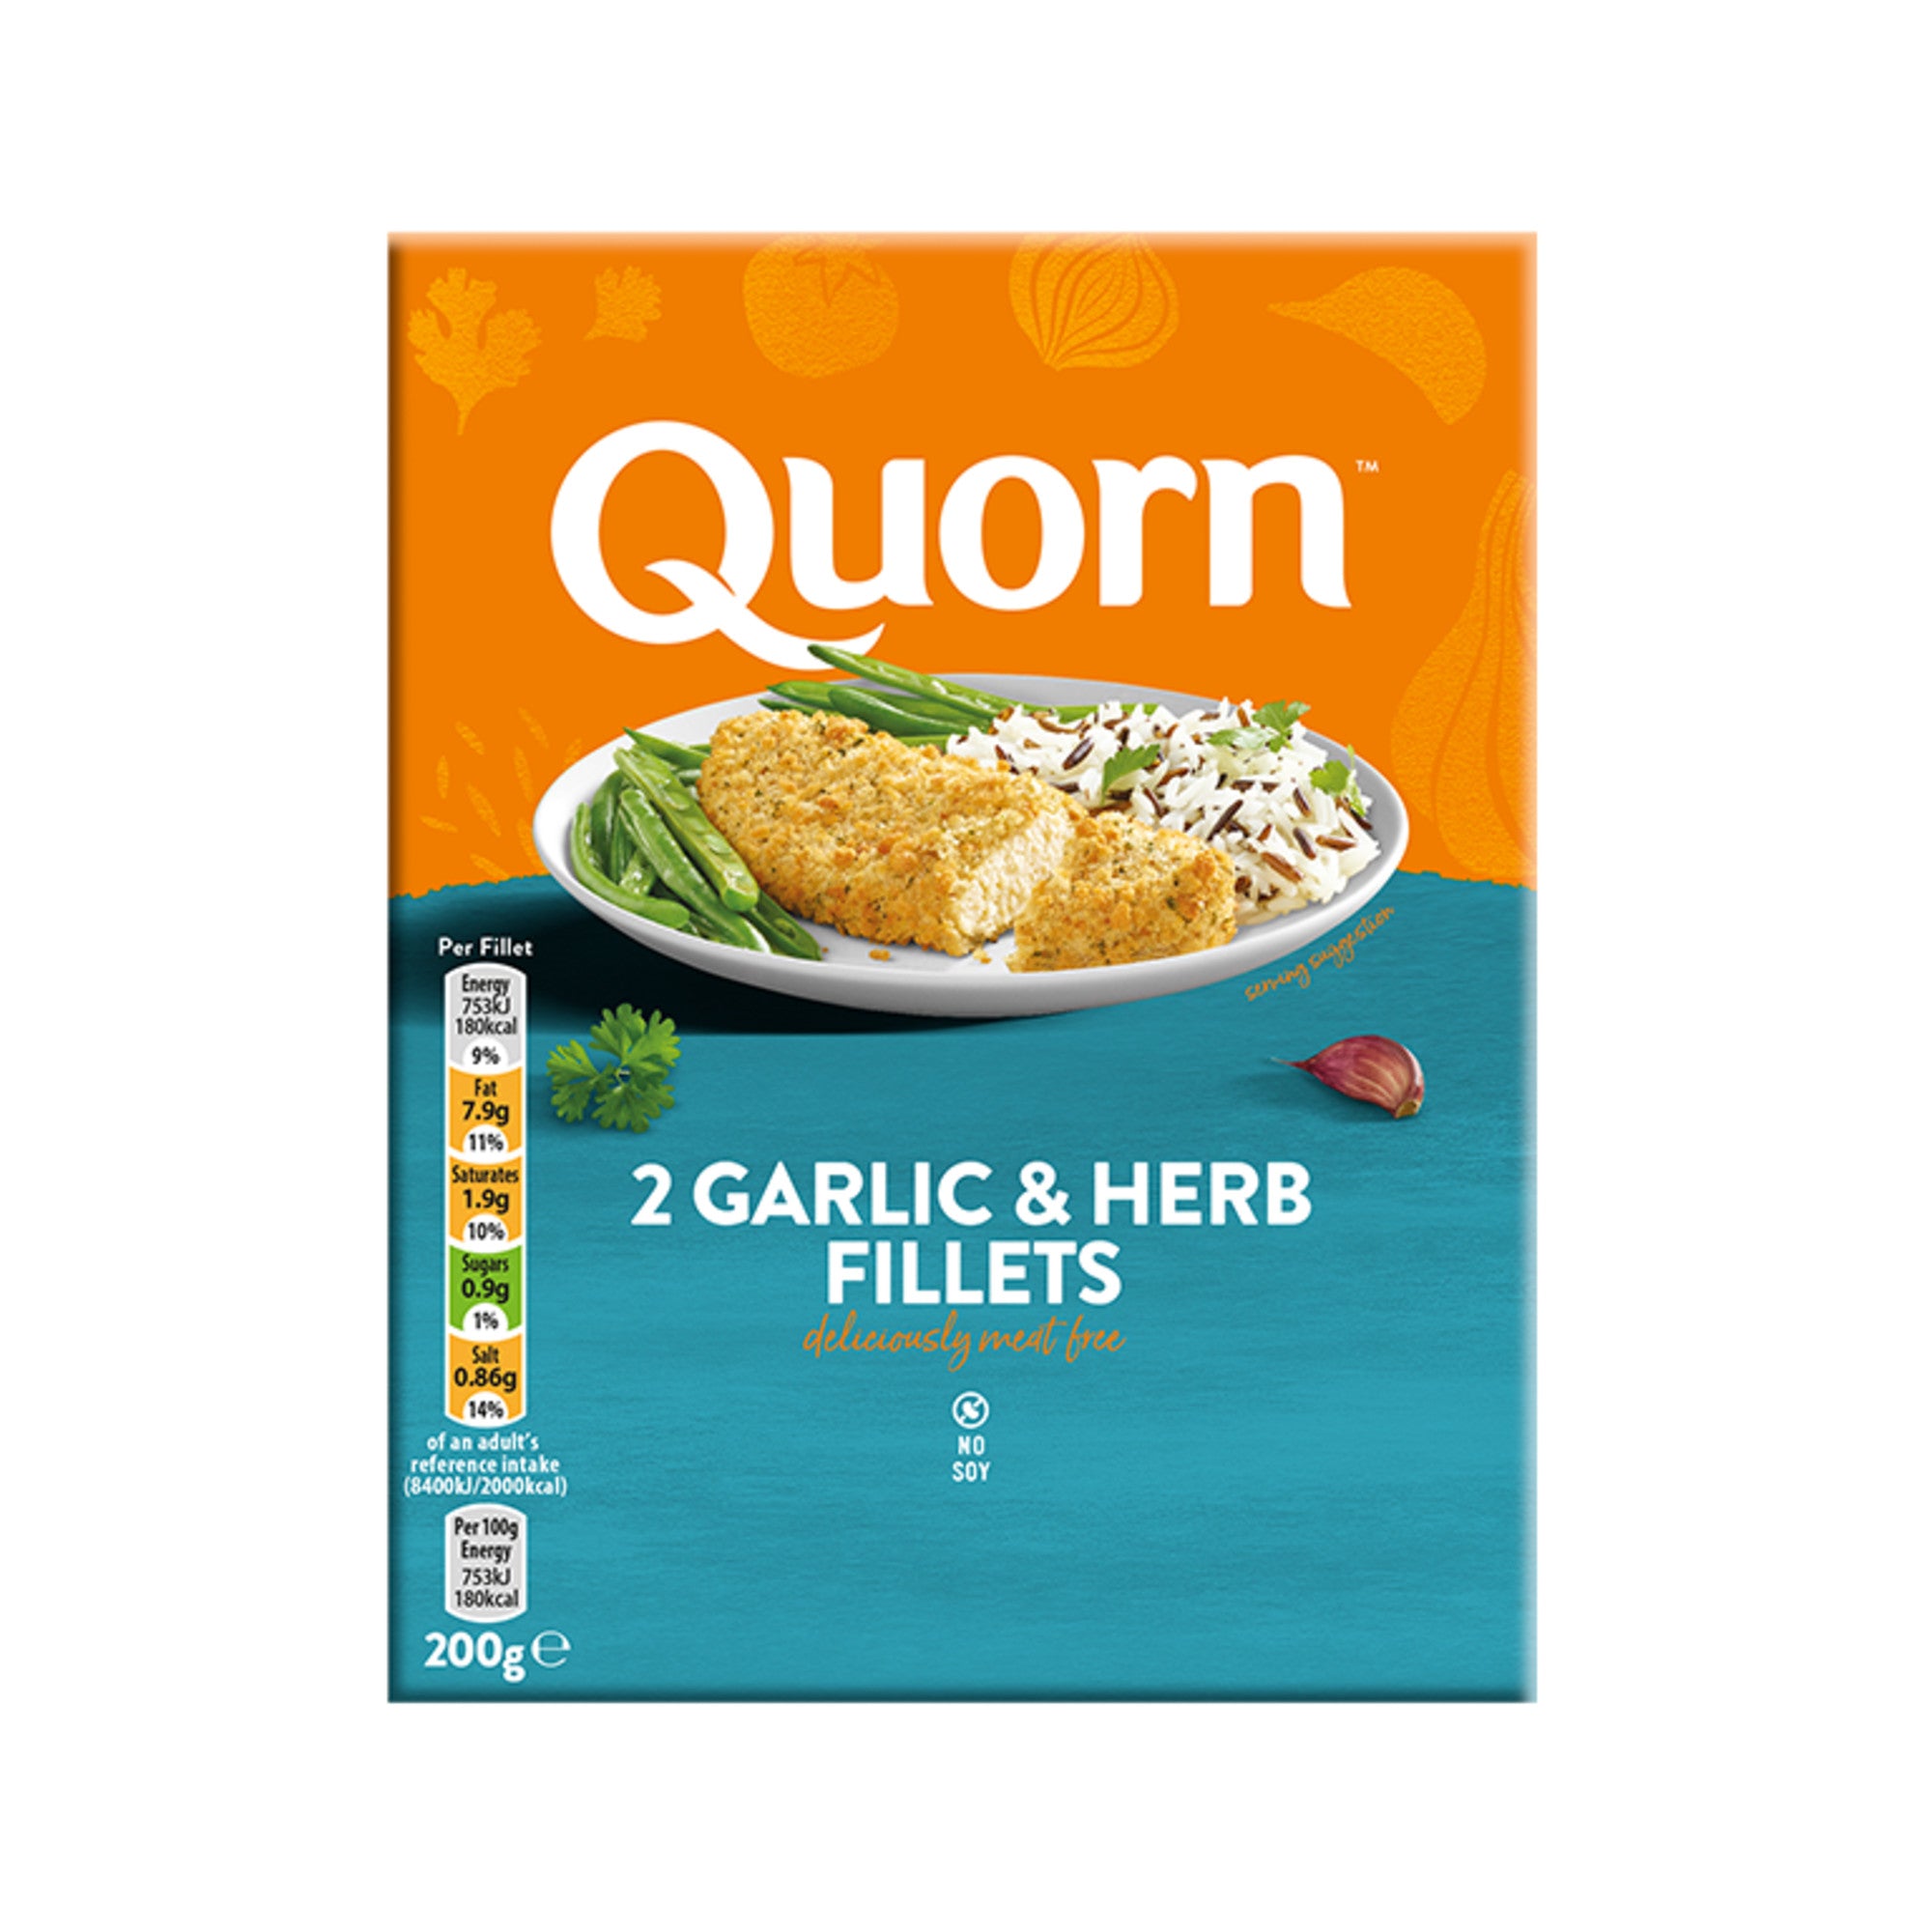 Quorn 2 Garlic & Herb Fillets 200g